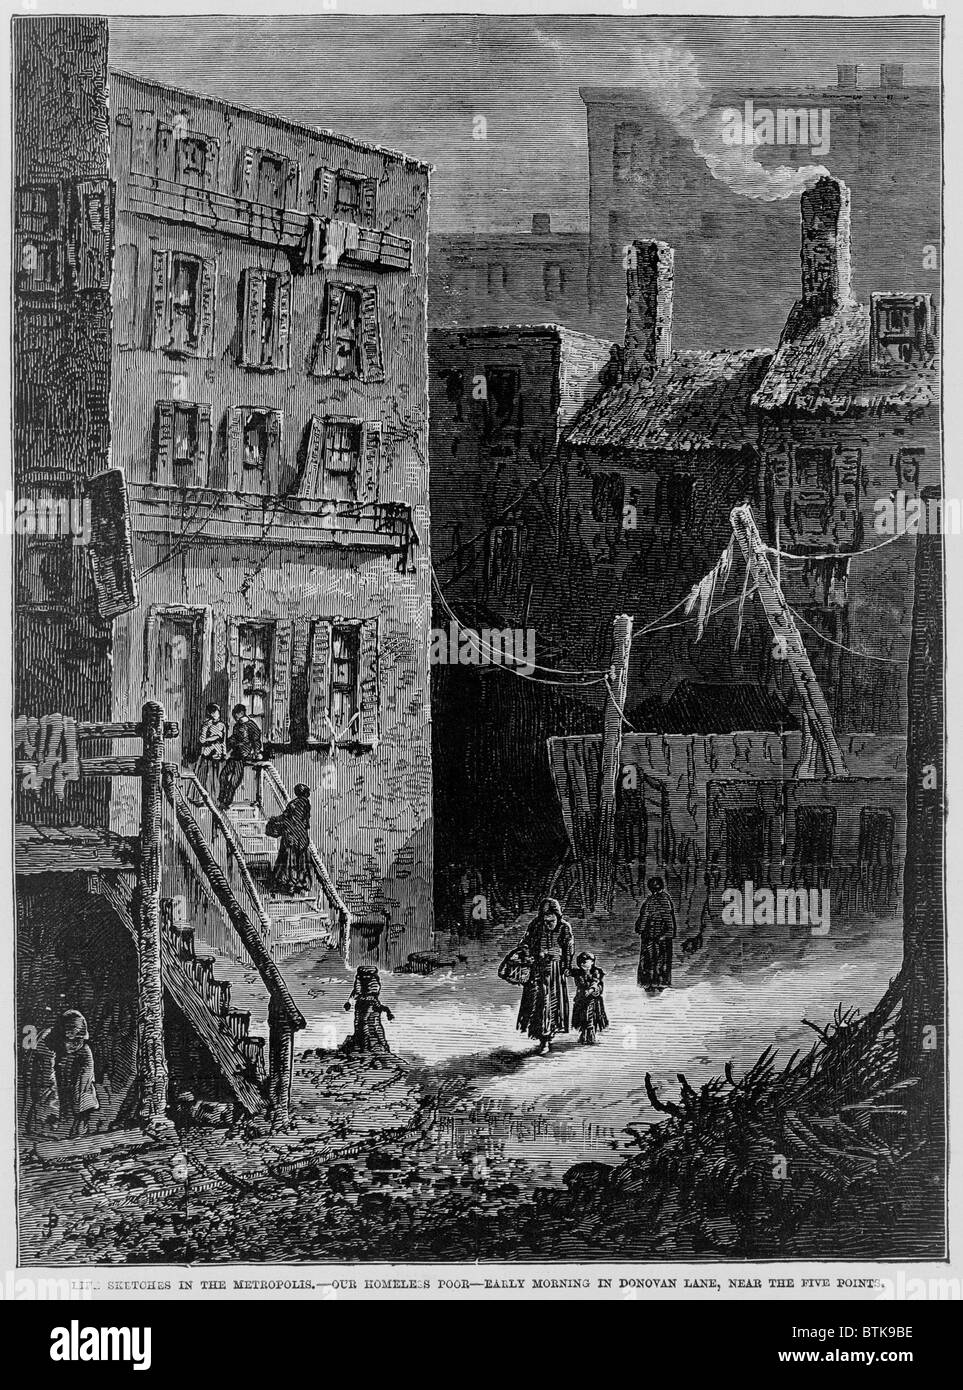 Homeless poor in Donovan Lane, near the Five Points slum neighborhood in New York City. 1872. Stock Photo